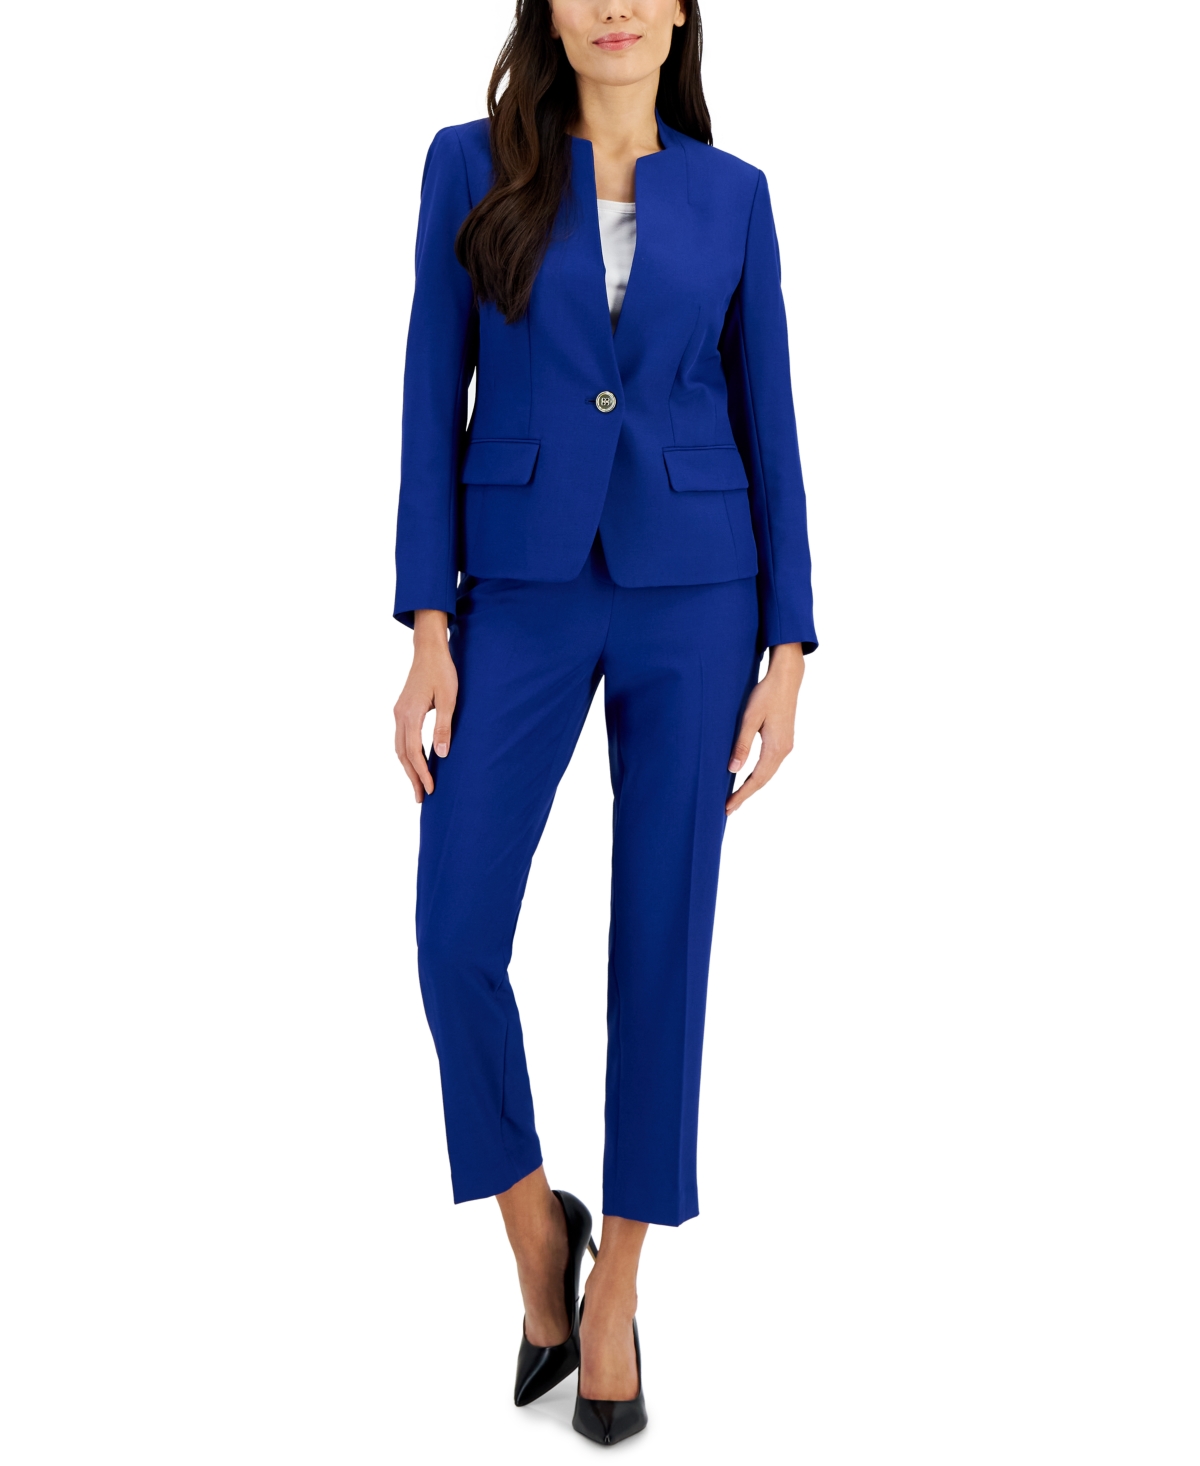 Single-Button Blazer and Slim-Fit Pantsuit, Regular and Petite Sizes - Twilight Blue